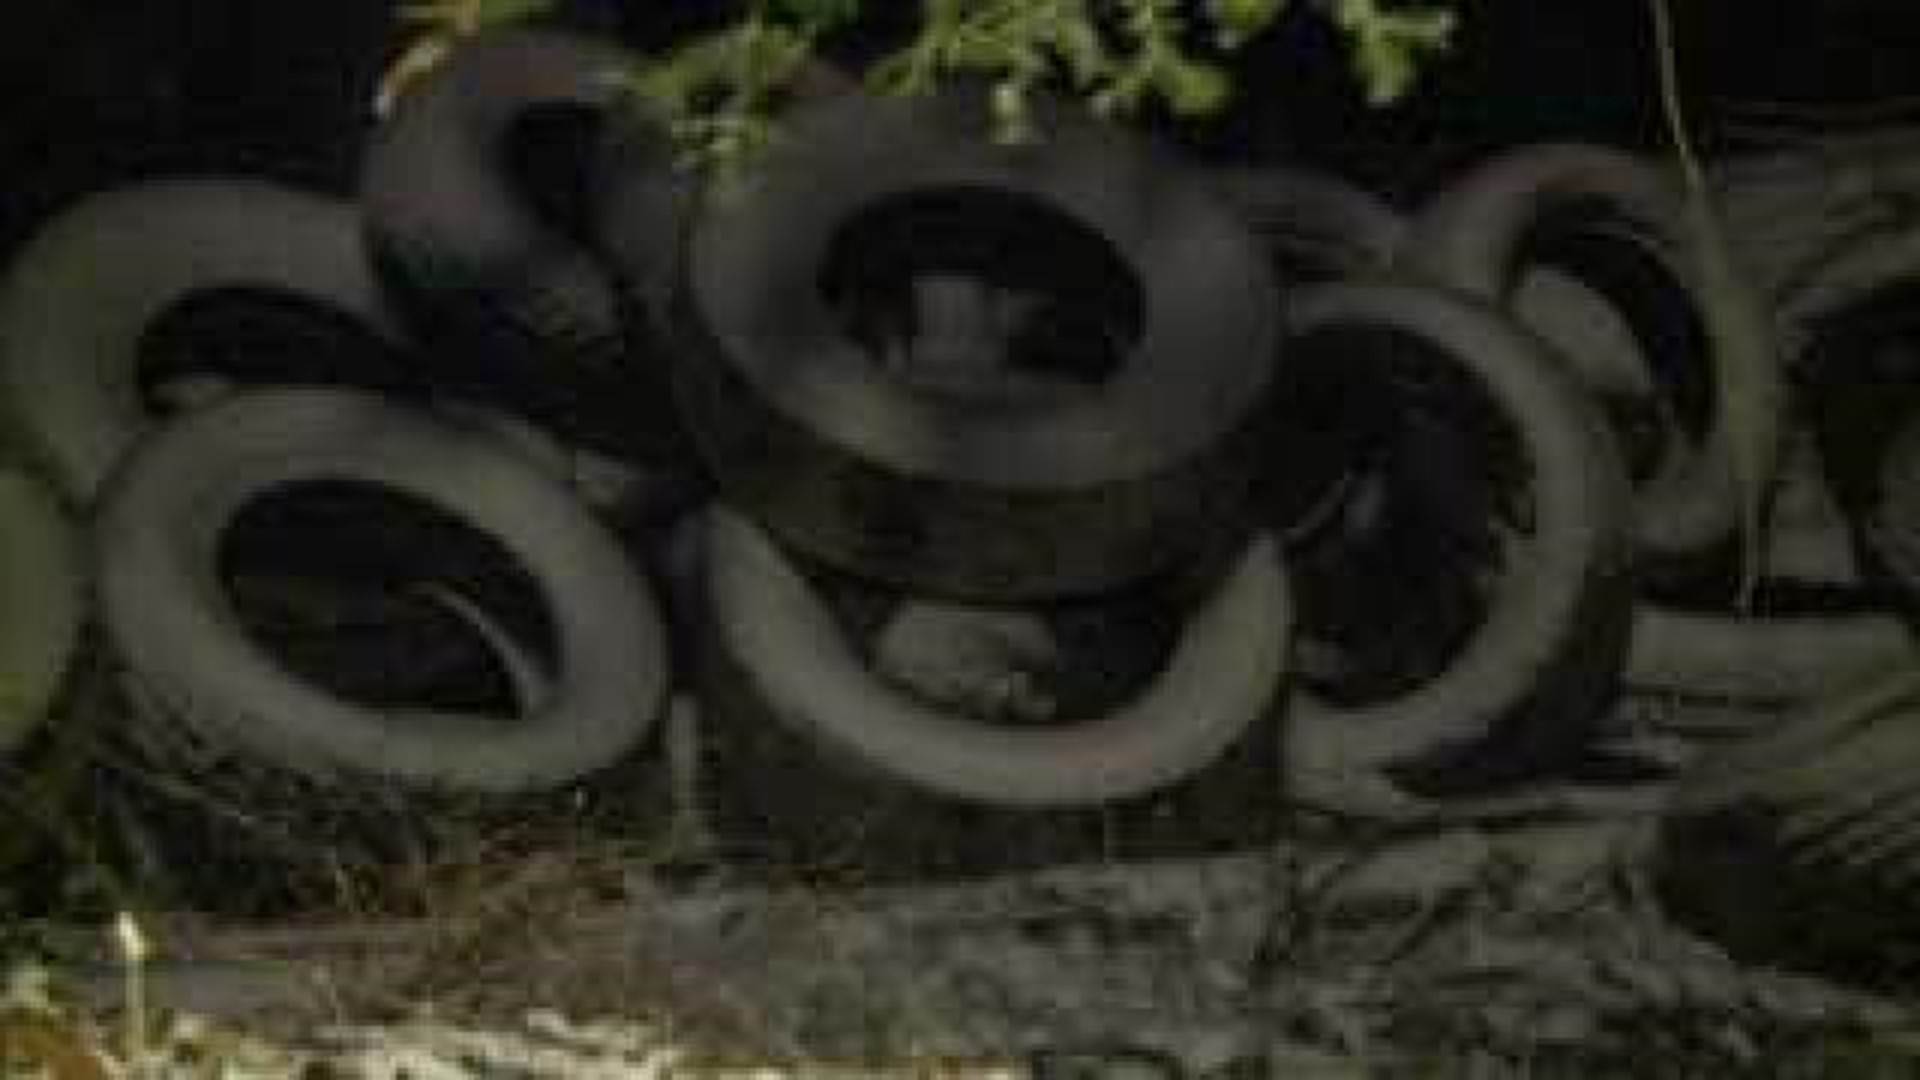 Dozens of Tires Dumped on Property